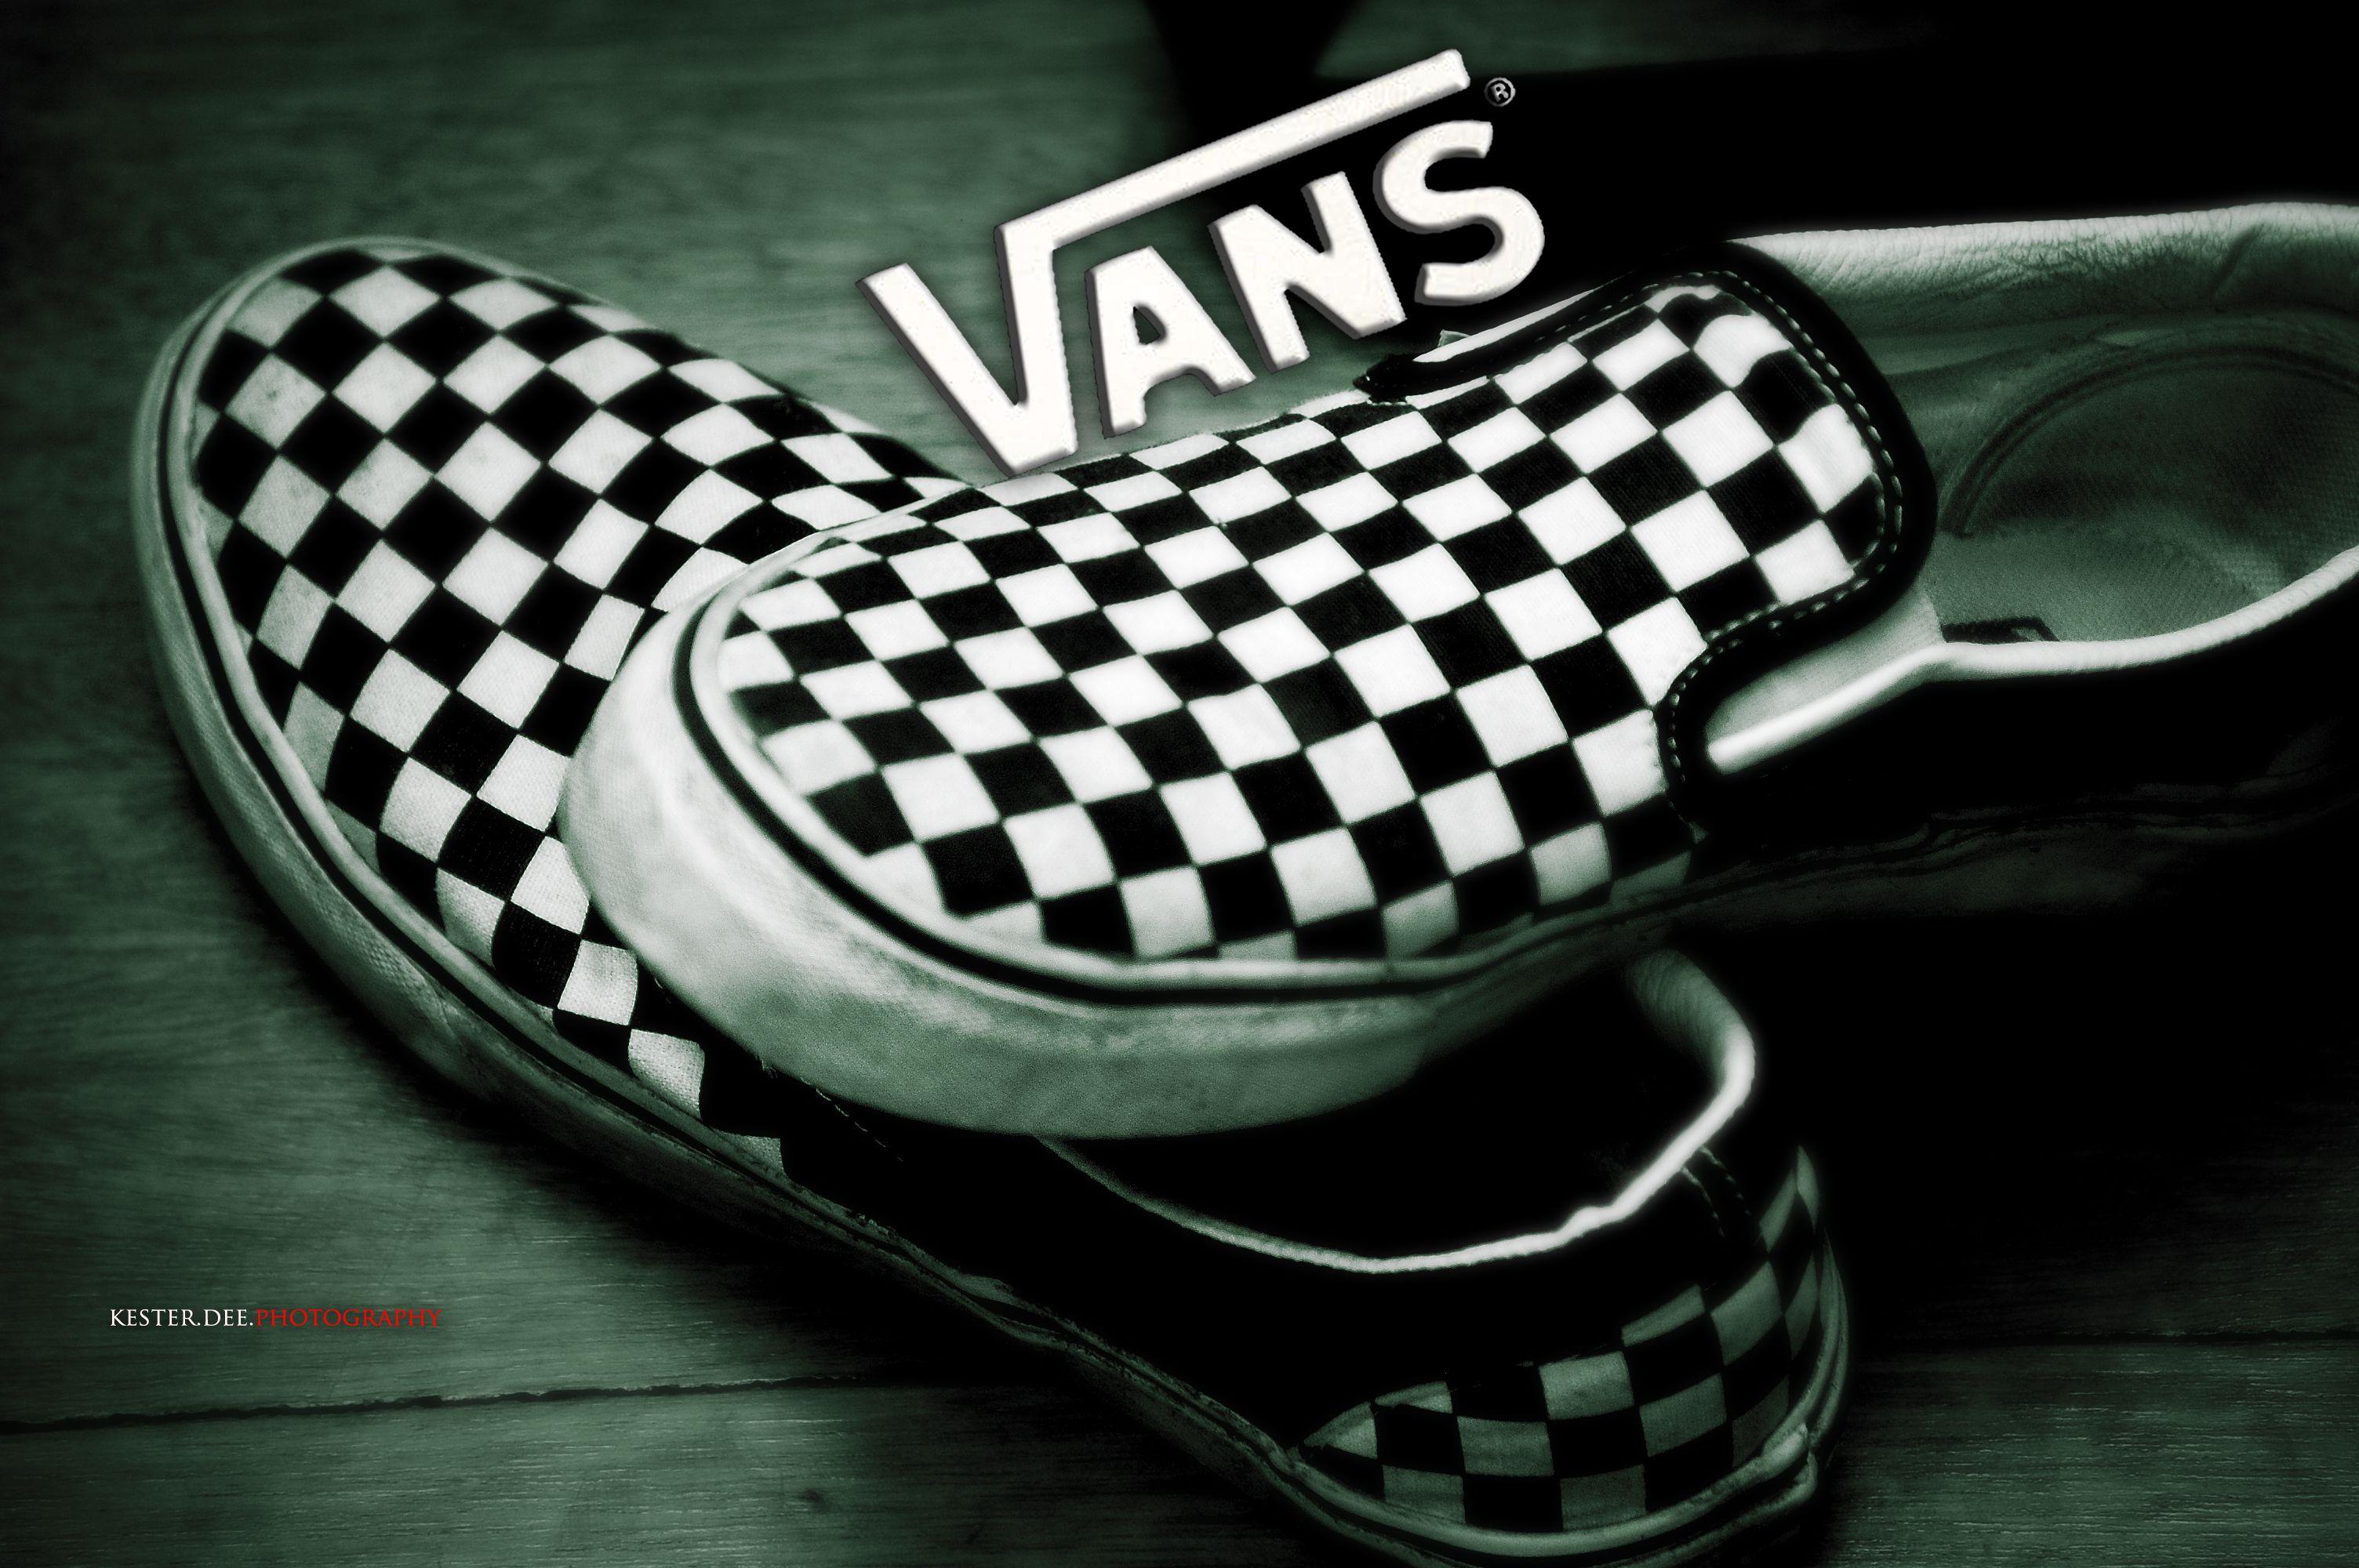 Vans Shoes Wallpaper, 48+ Best & Inspirational High Quality Vans